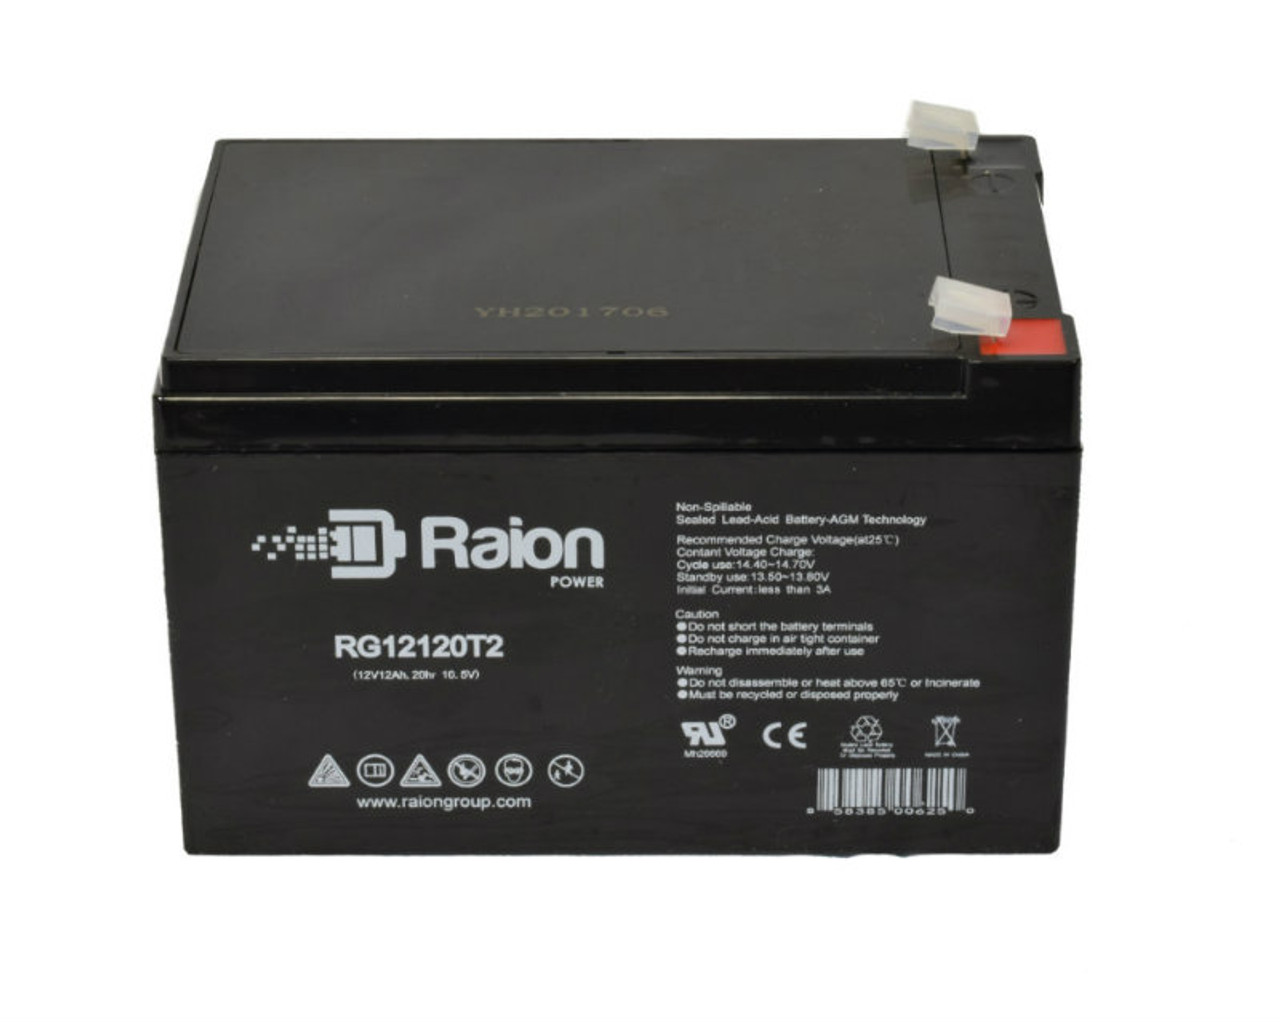 Raion Power RG12120T2 SLA Battery for GIO Italia MK 500W